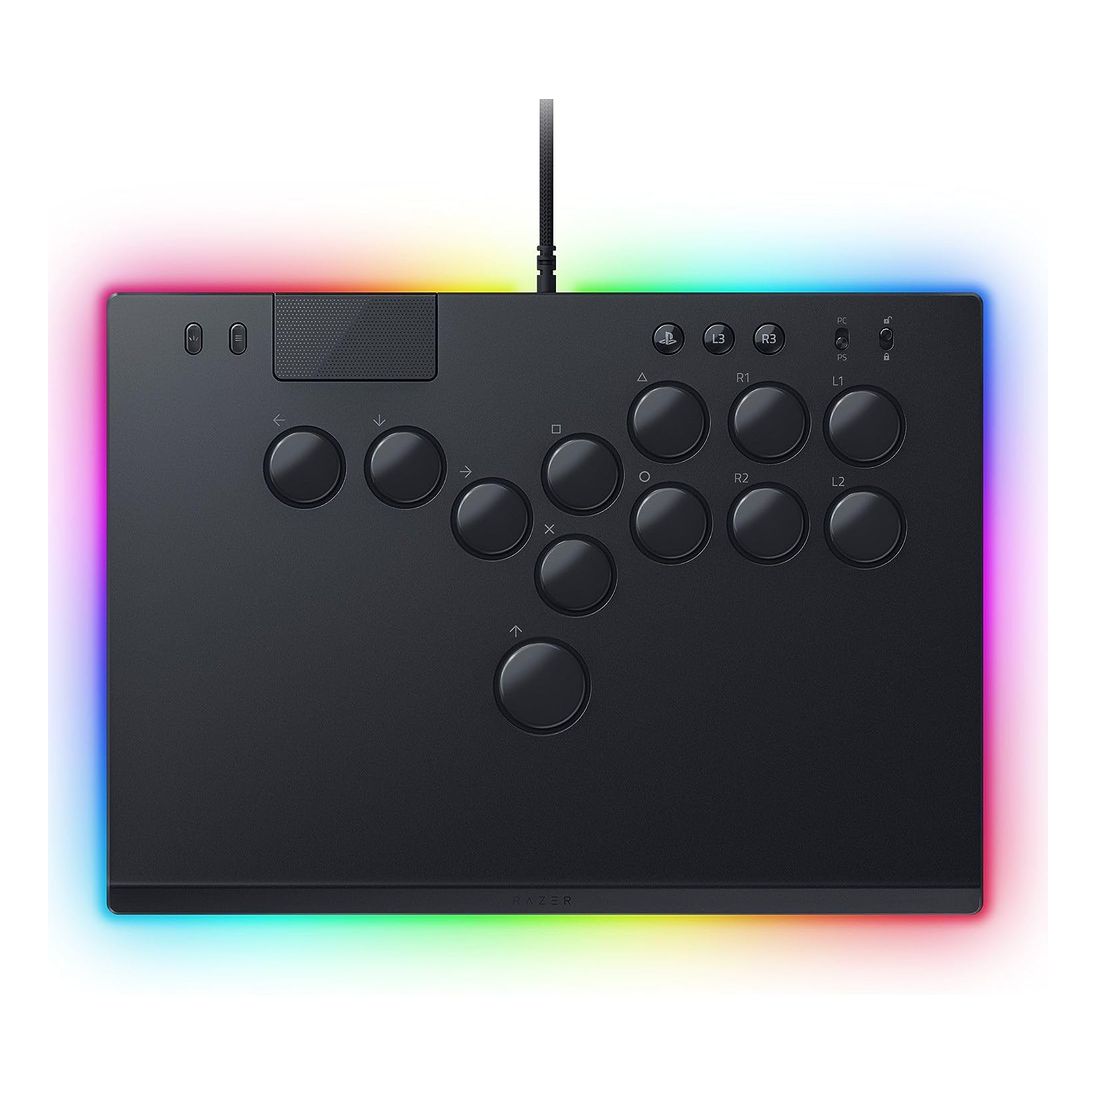 Razer Kitsune - All-Button Optical Arcade Controller for PS5 and PC